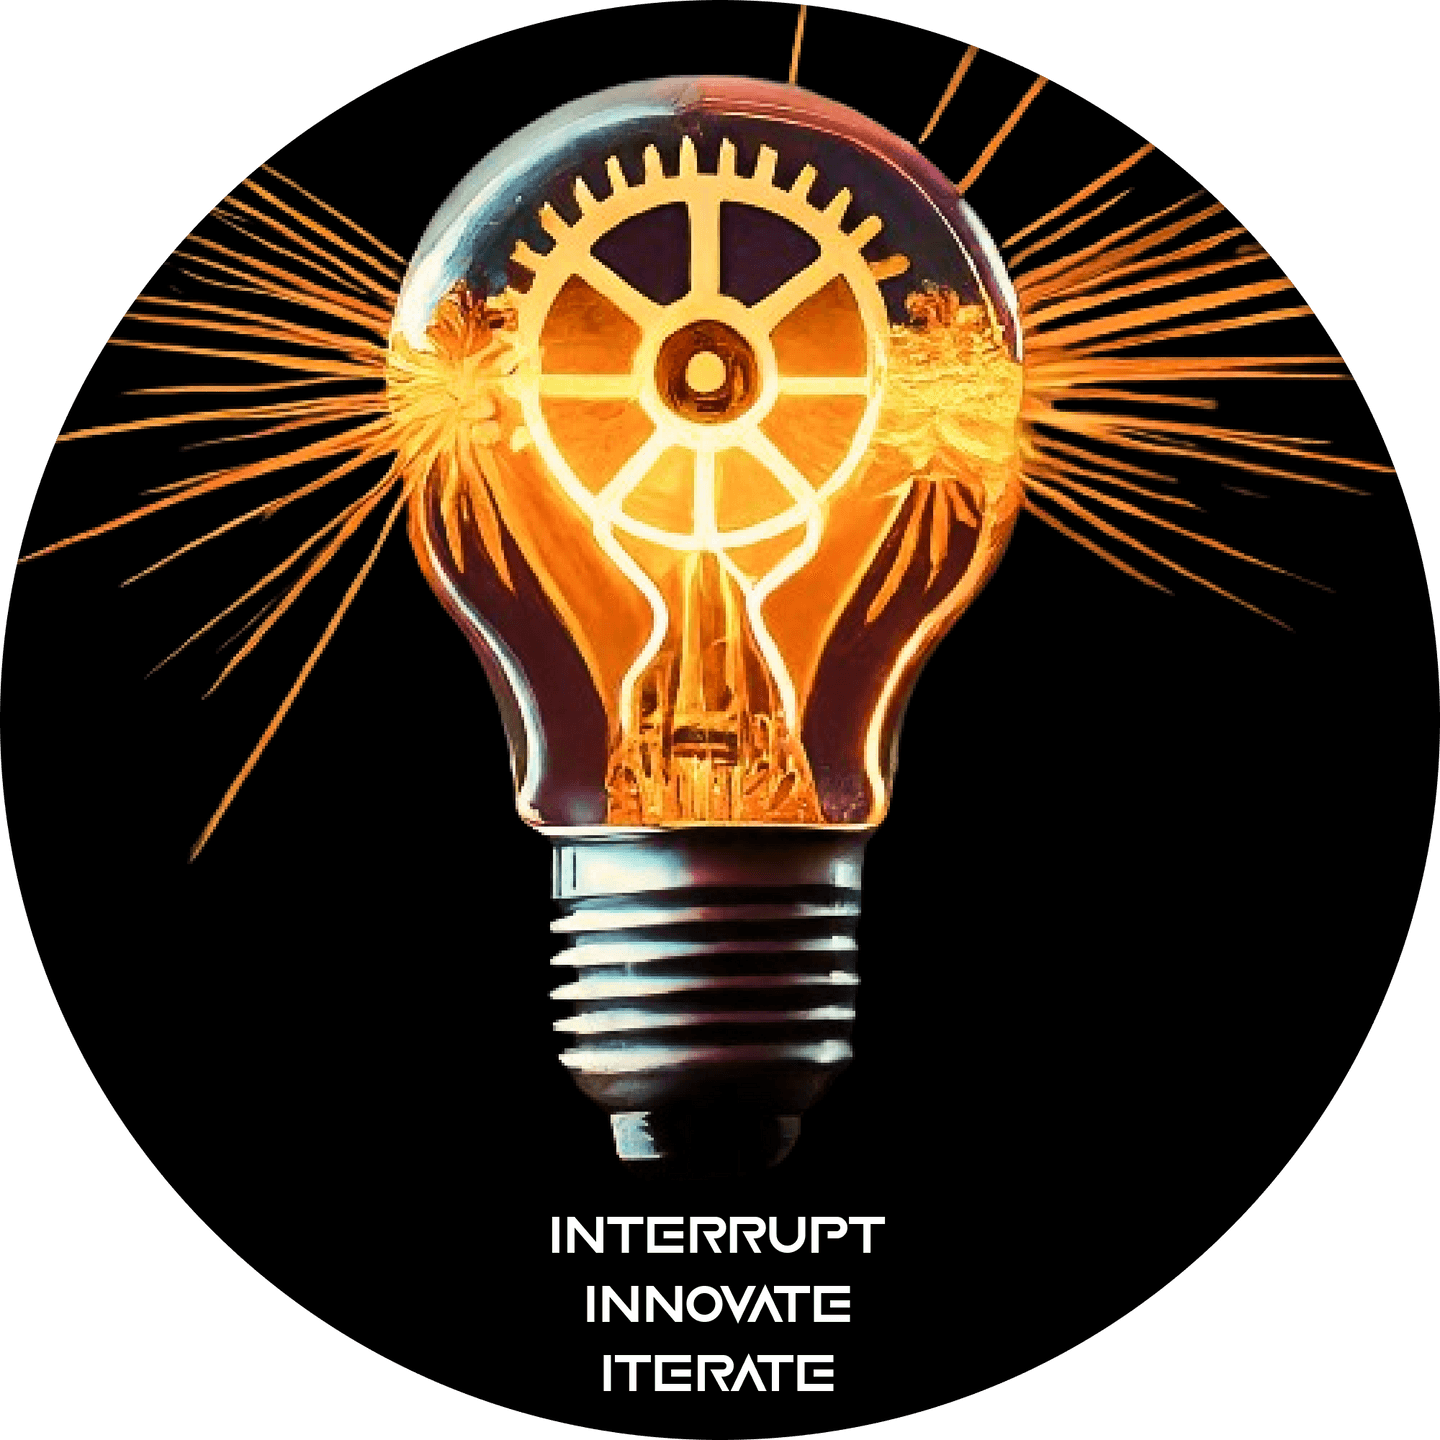 Innovate-Iterate-Interrupt (III) 4.0